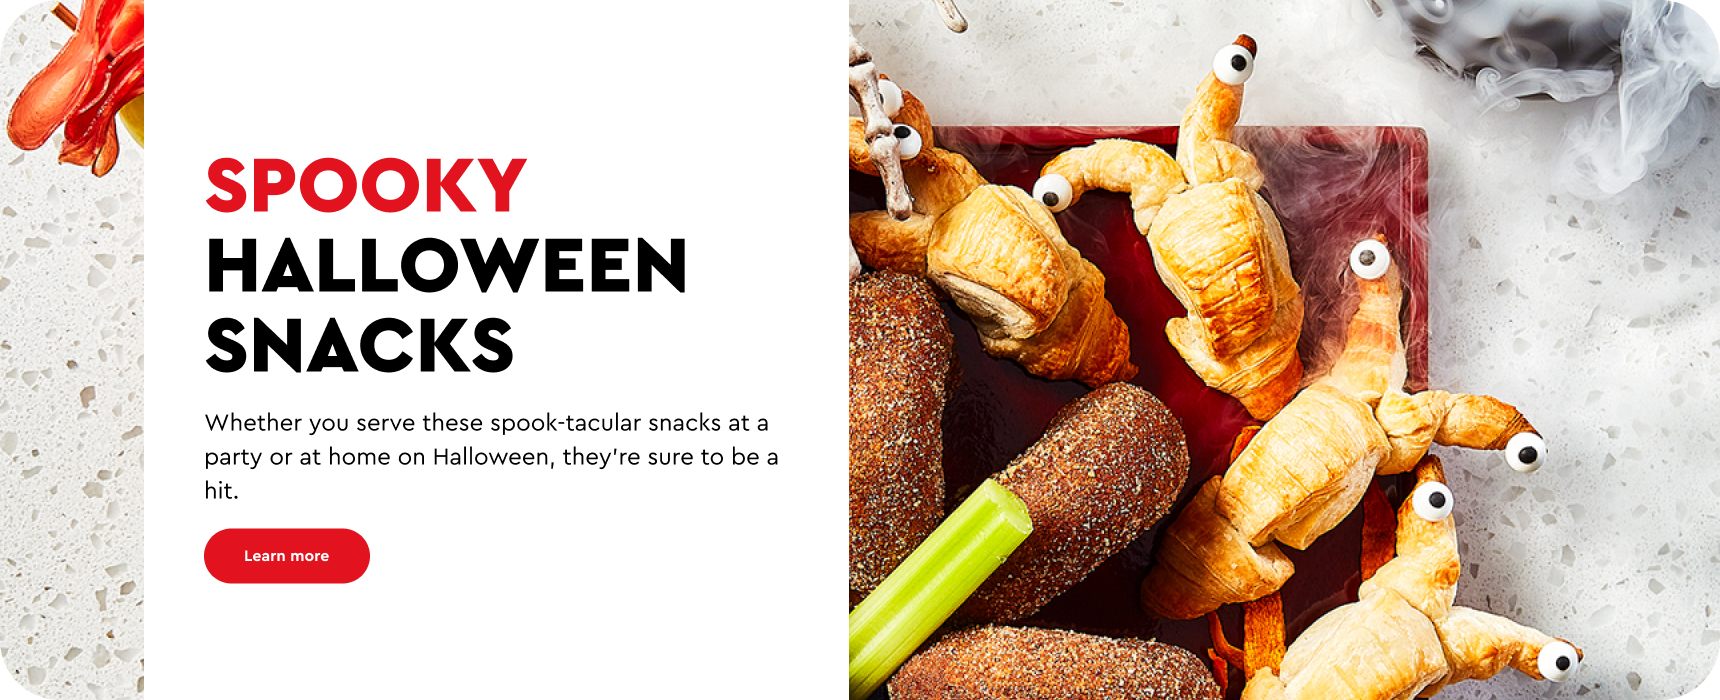 Spooky Halloween snacks